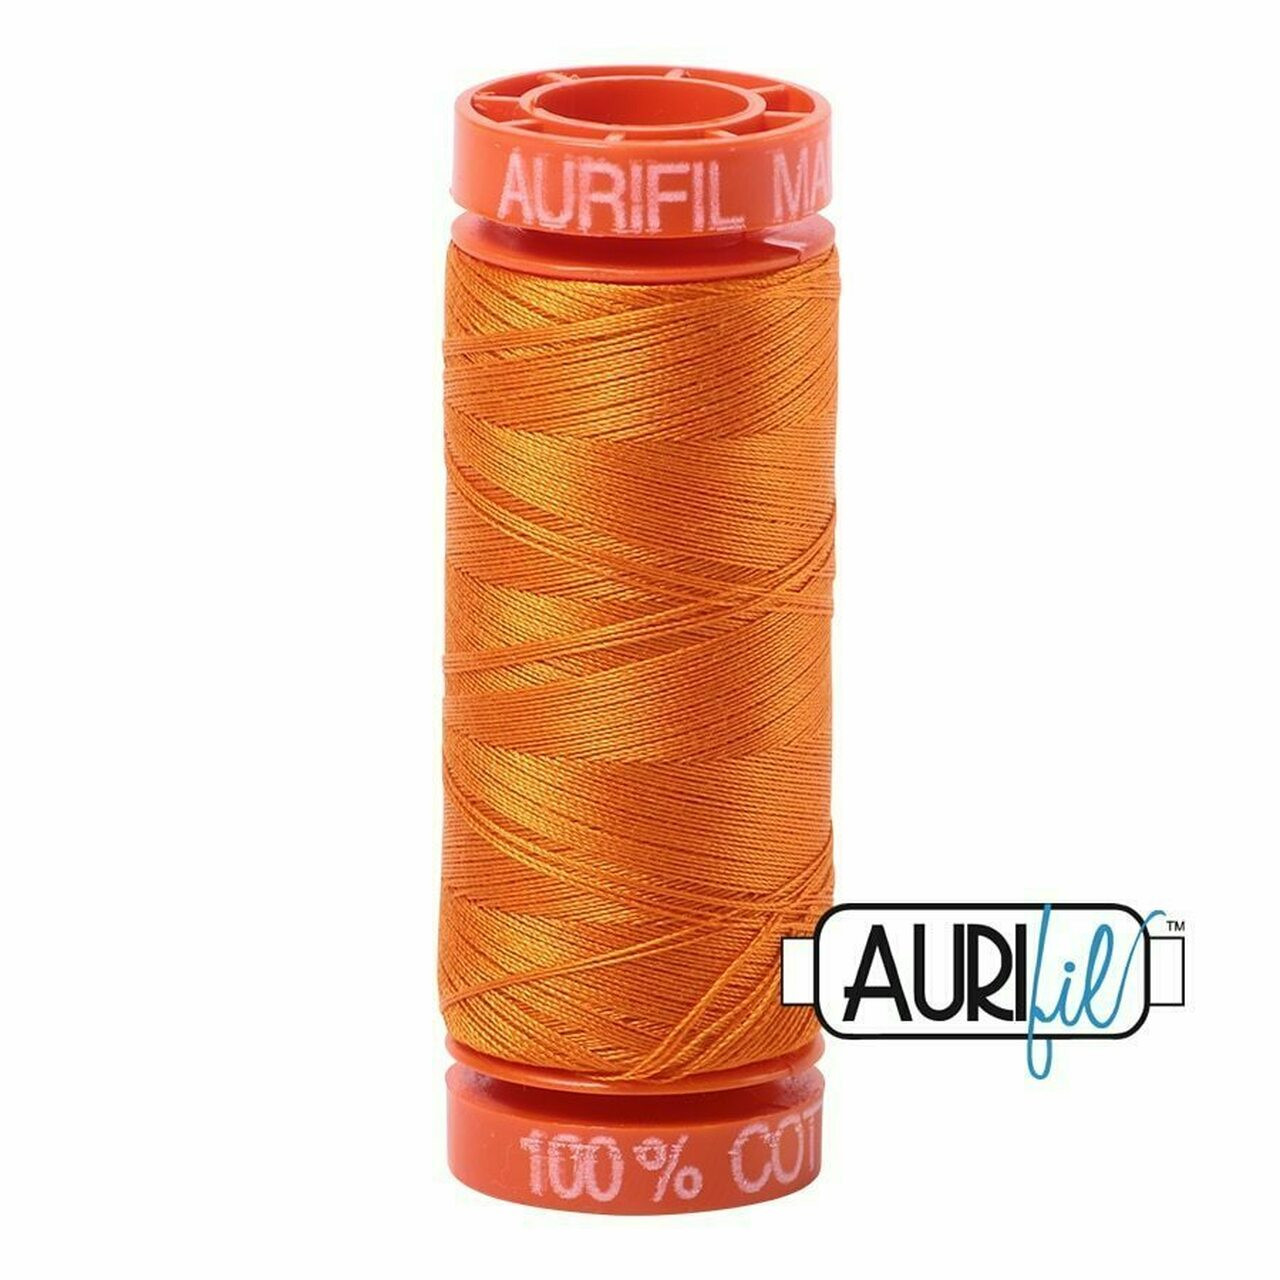 Aurifil 1133 - Bright Orange